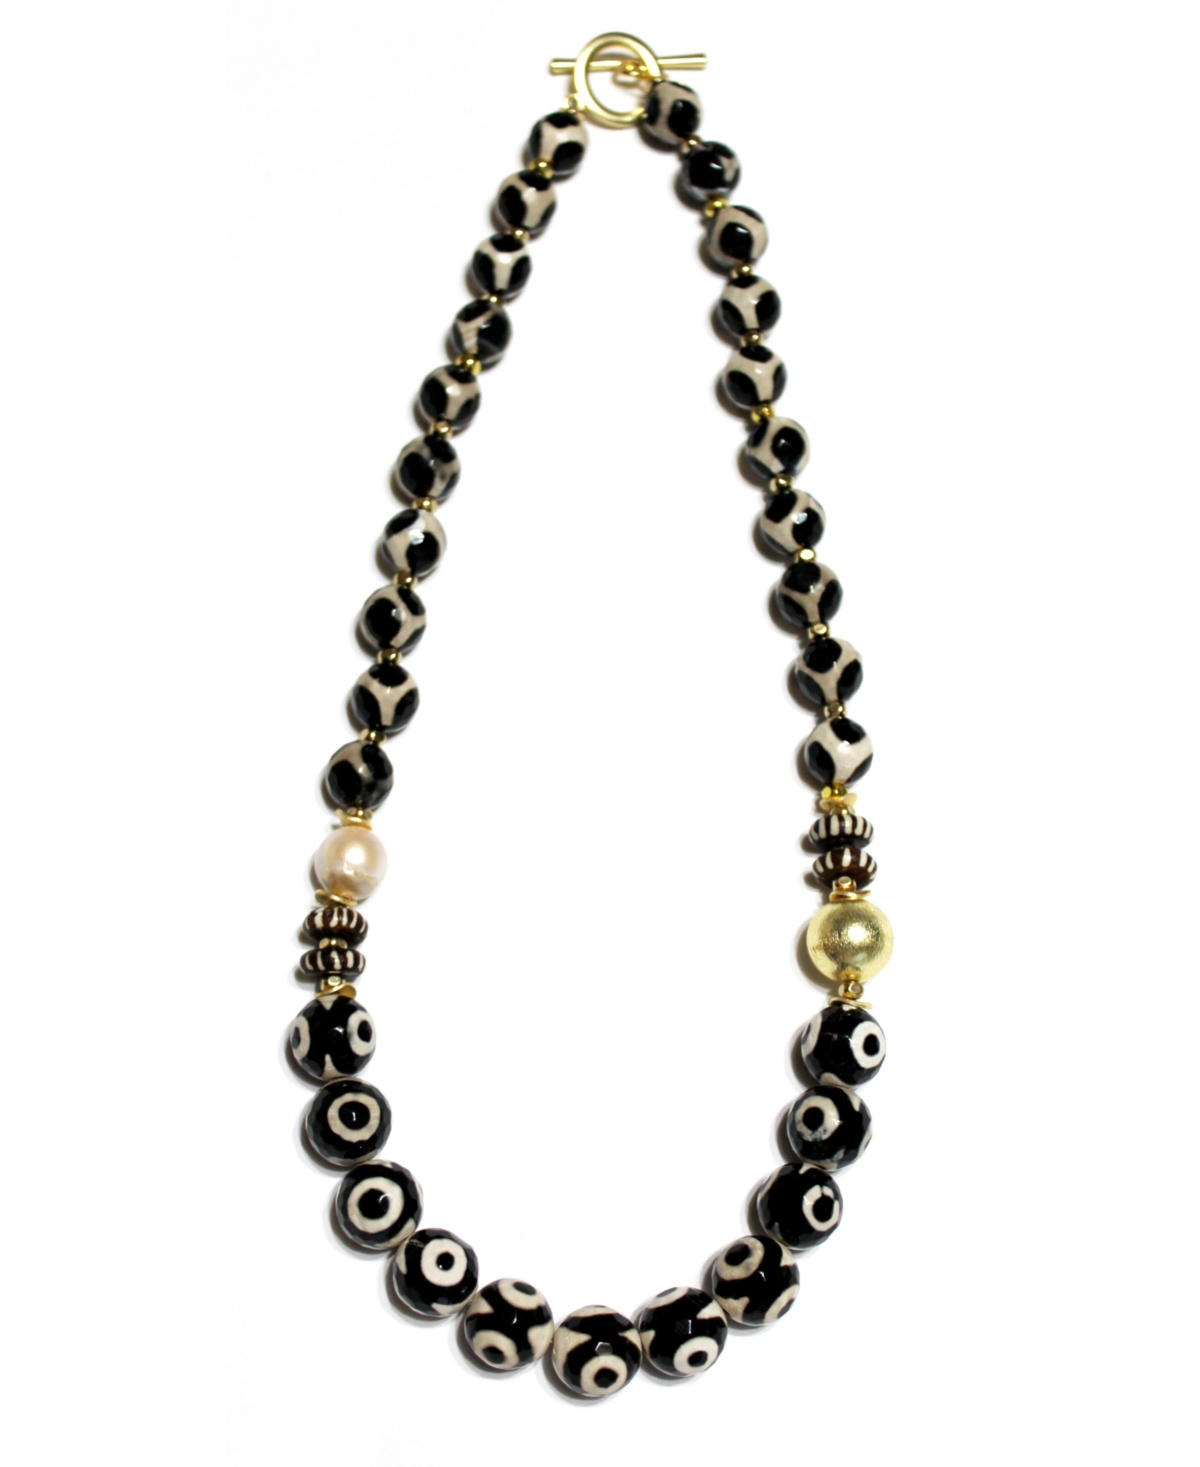 Michael Gabriel Designs Black Dahlia Tibetan Agate Beads and Genuine Pearl Necklace